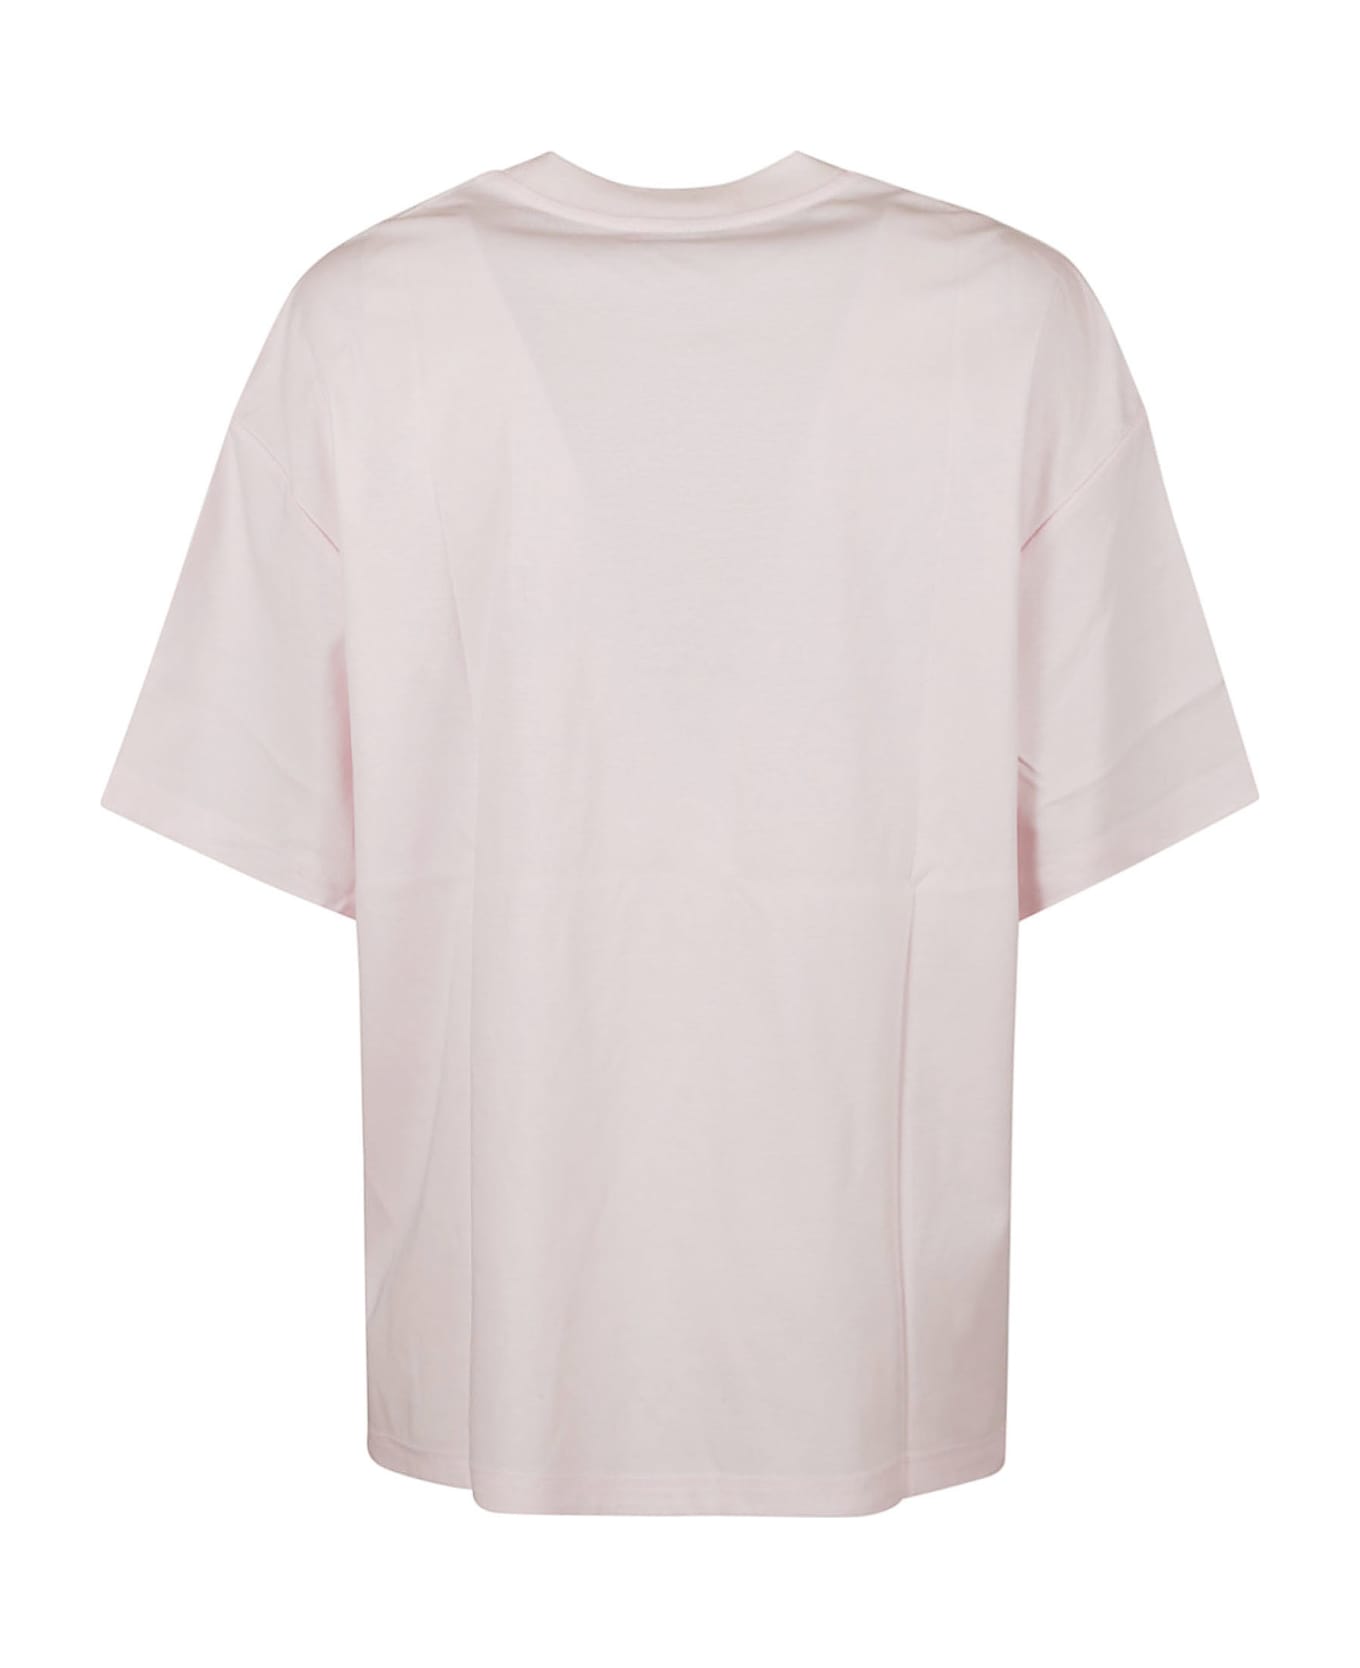 Lanvin Logo Chest T-shirt - Pink Tシャツ